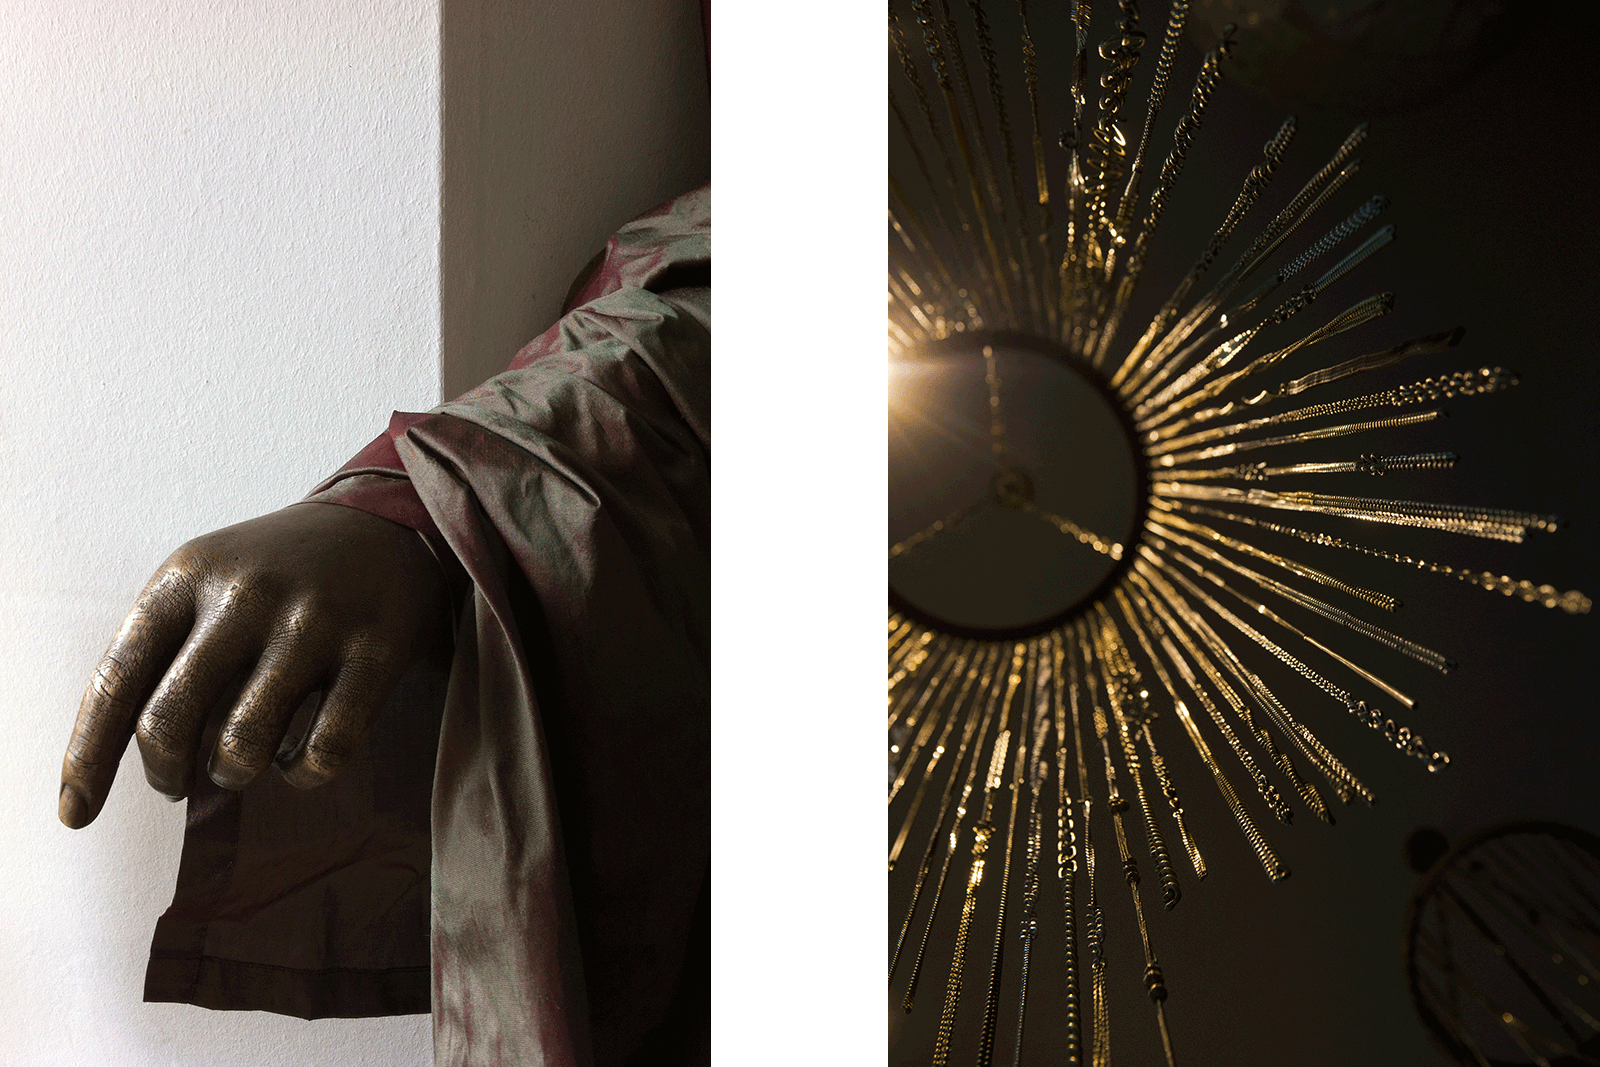 Ana Araujo, Willem de Bruijn, Rembrandt’s Hand, London, 2013; Ana Araujo, Roberta Costa, Ladies of Savoy, Belo Horizonte, 2014.